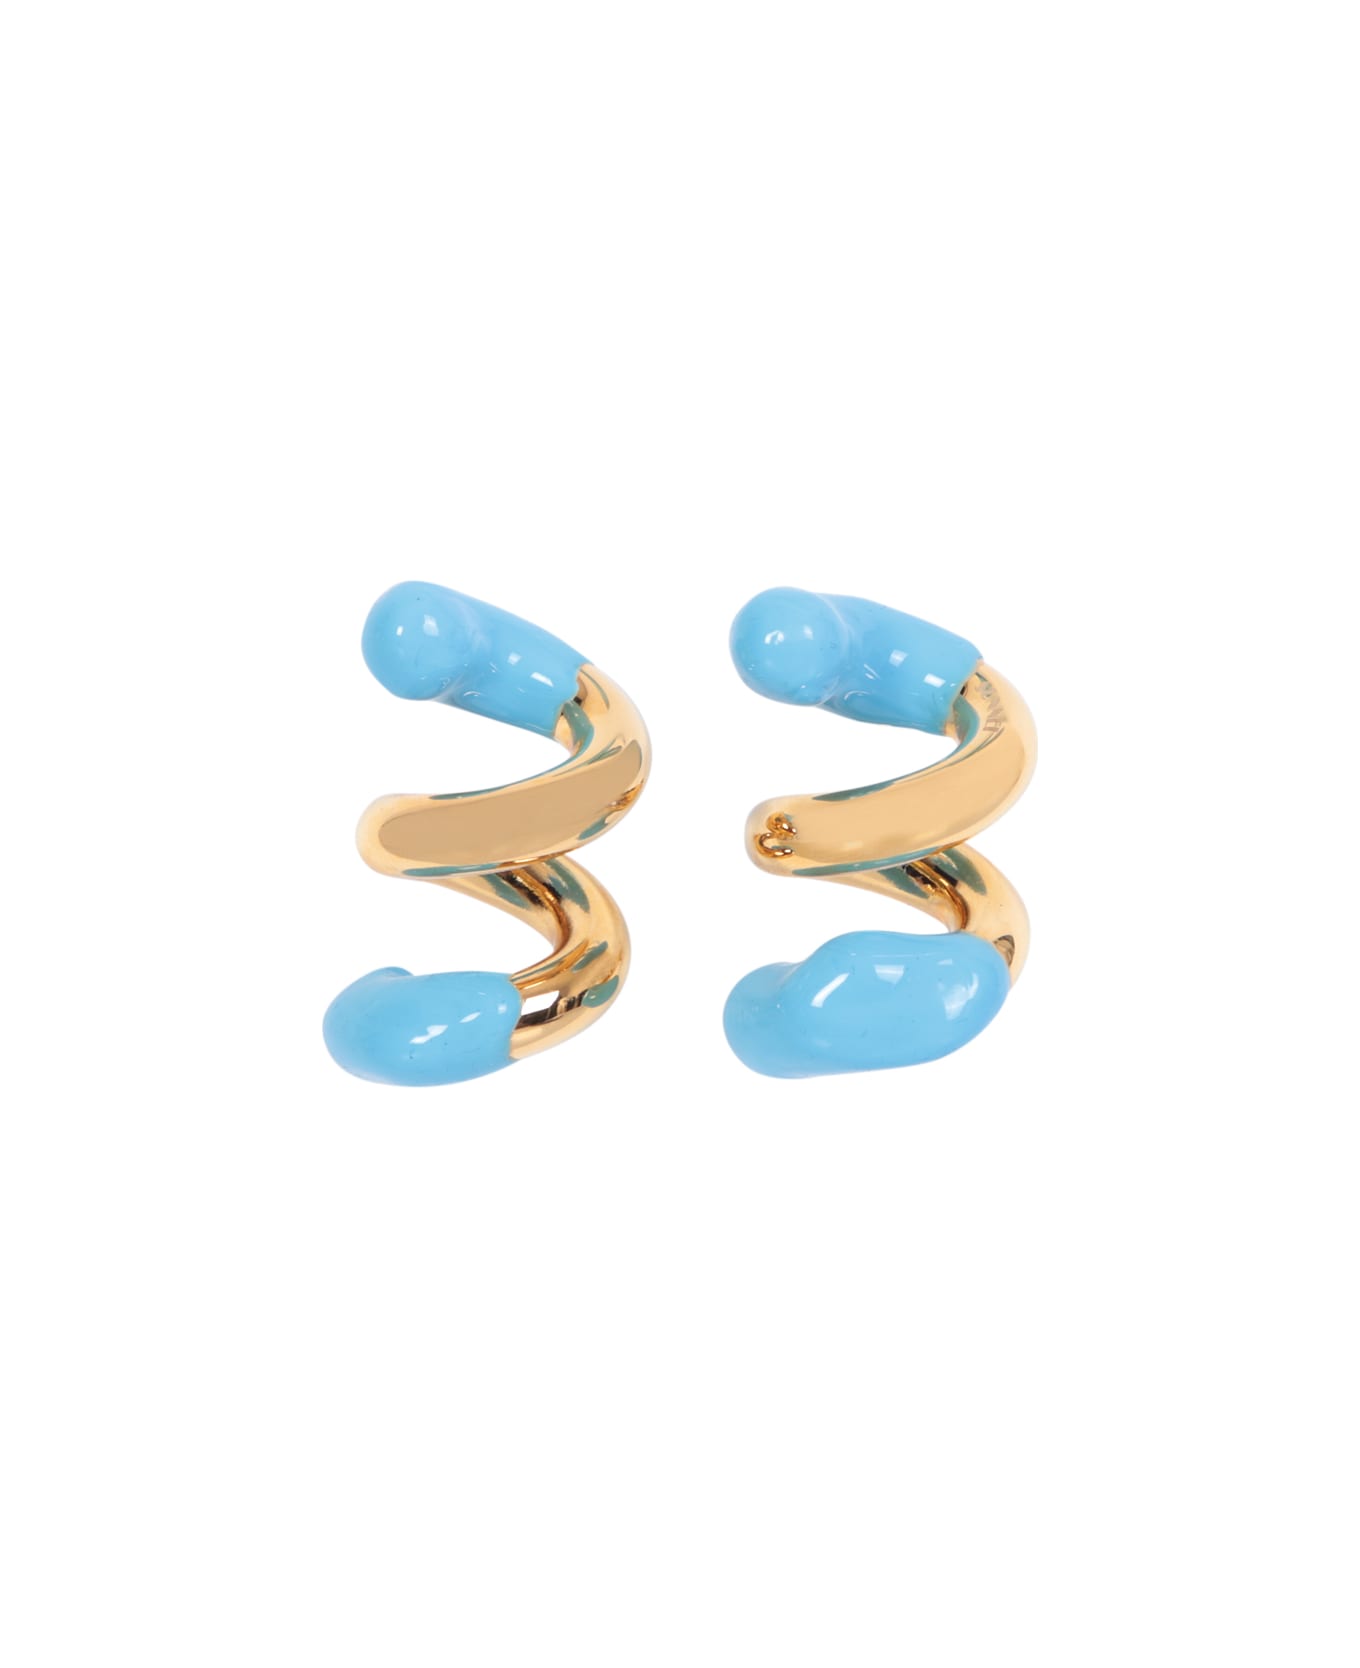 Sunnei Fusillo Rubberized Gold/ Light Blue Earrings - Blue ジュエリー